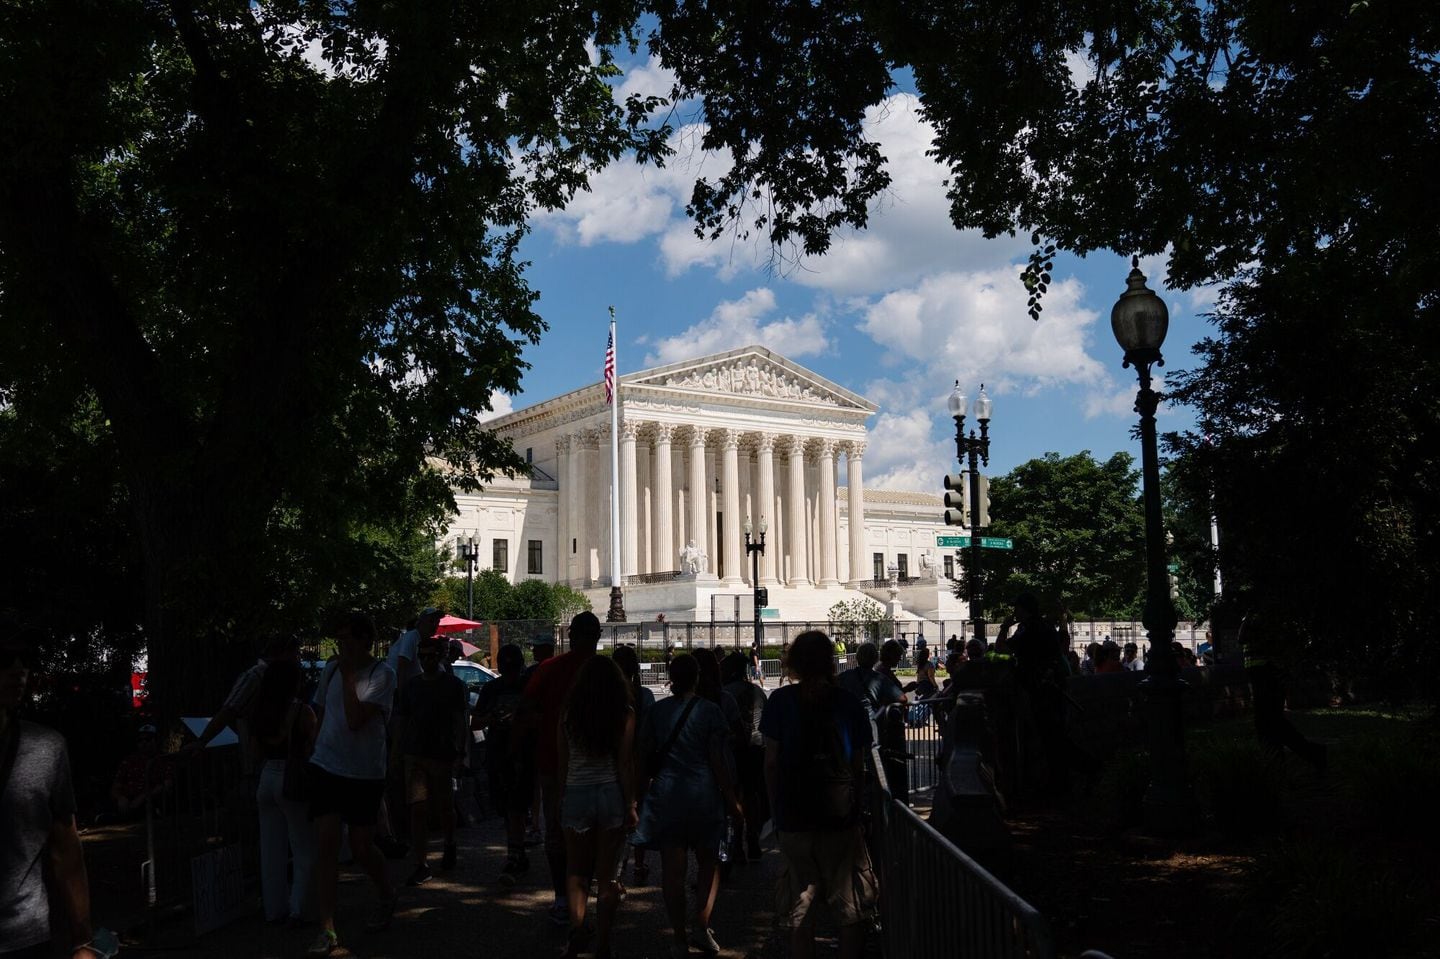 The US Supreme Court in Washington, D.C.